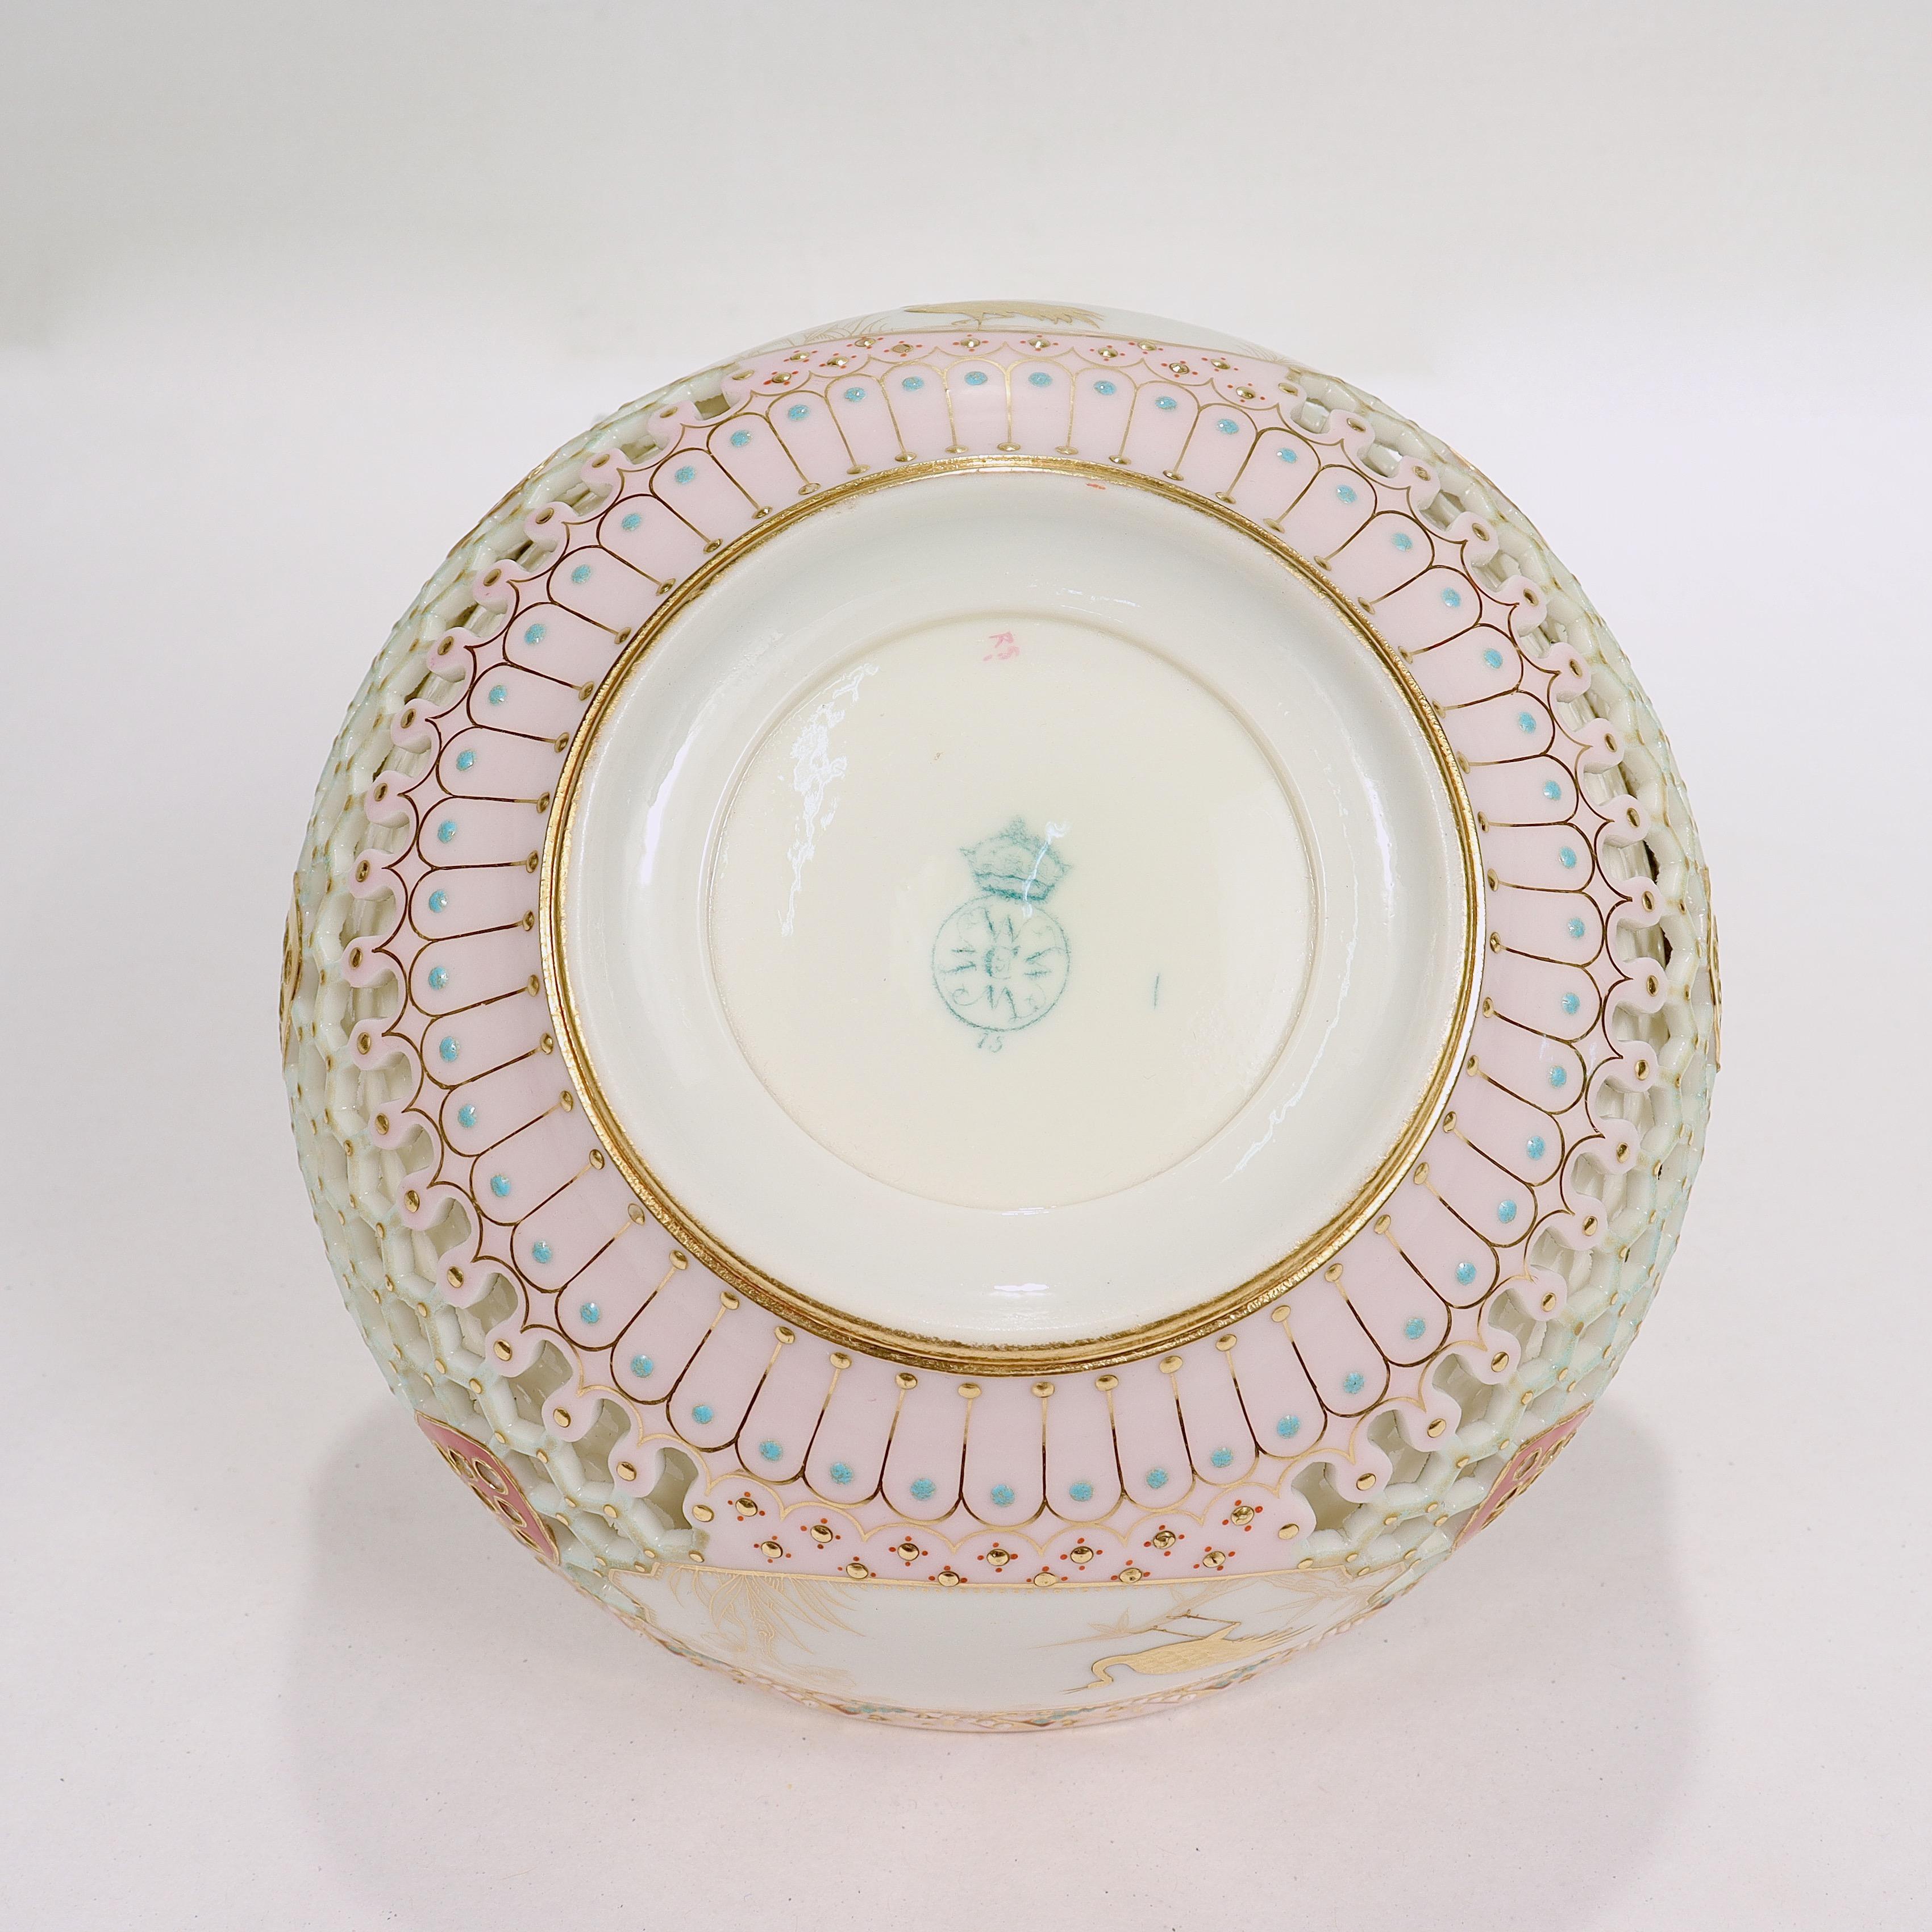 Reticulated Royal Worcester Porcelain Bowl Attr. to George Owen & Samuel Ranford For Sale 3